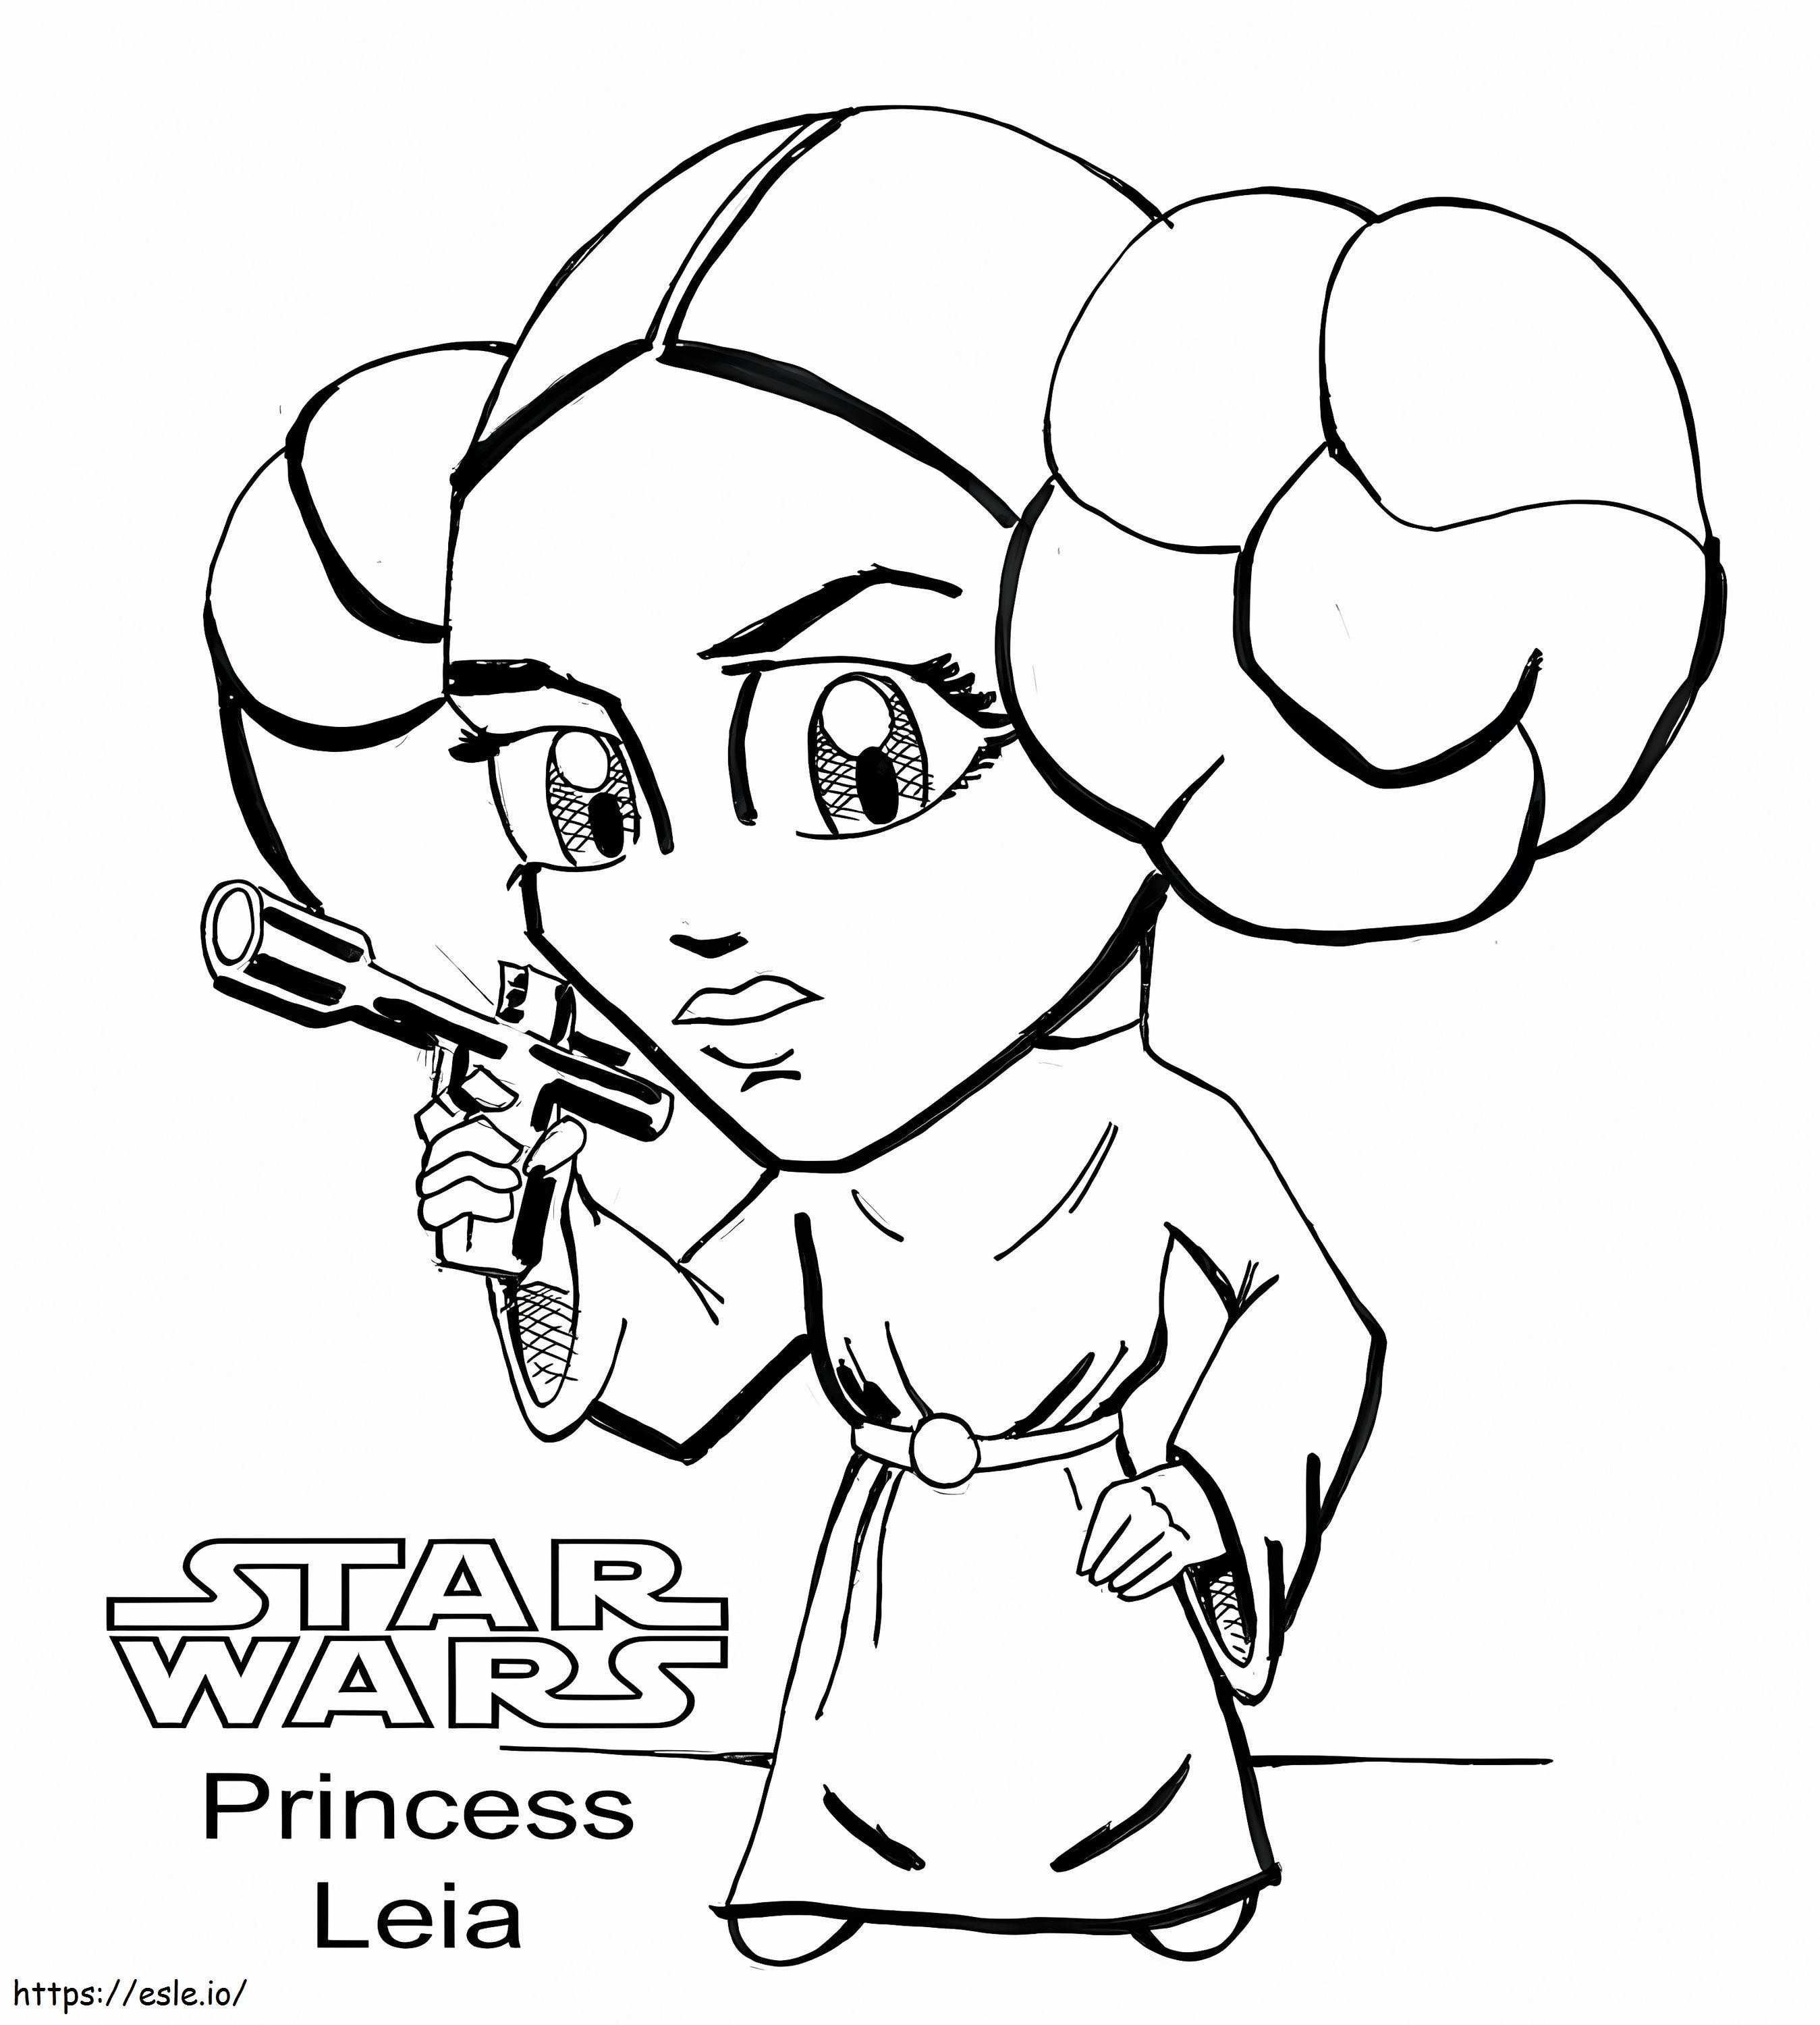 Lustige Prinzessin Leia ausmalbilder